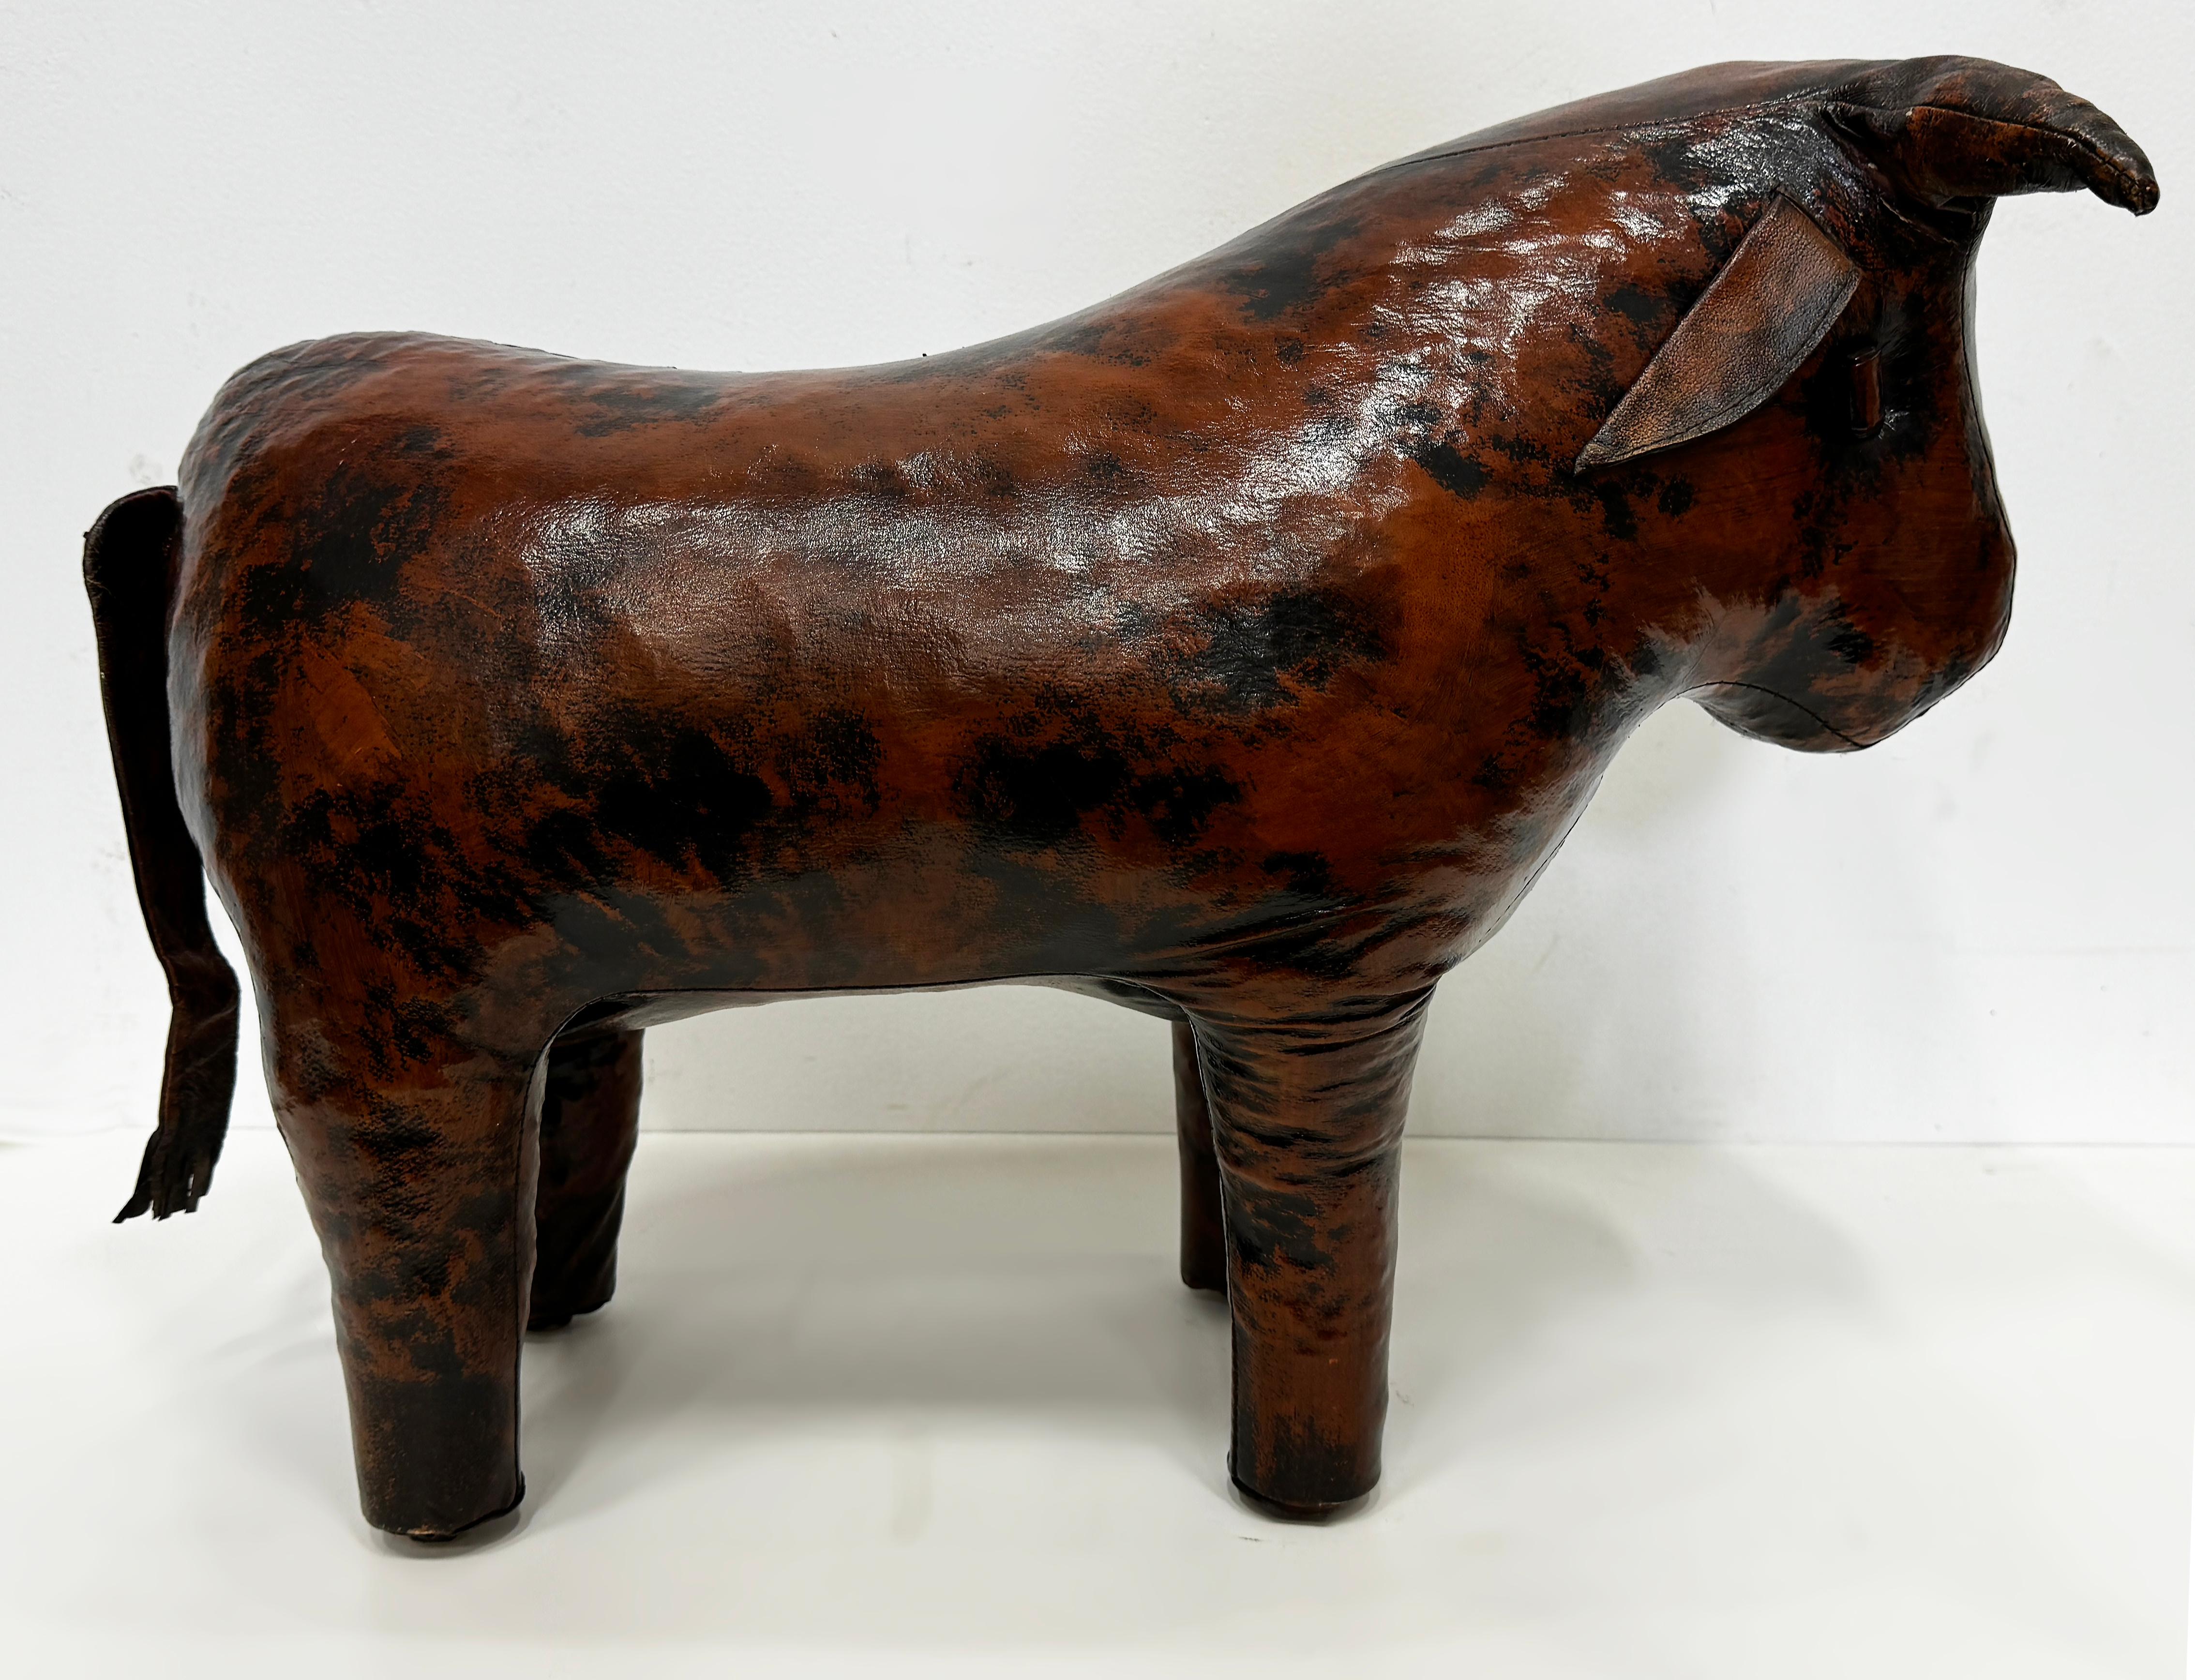  Mid-century Dimitri Omersa for Valenti Home Bull Ottoman For Sale 2